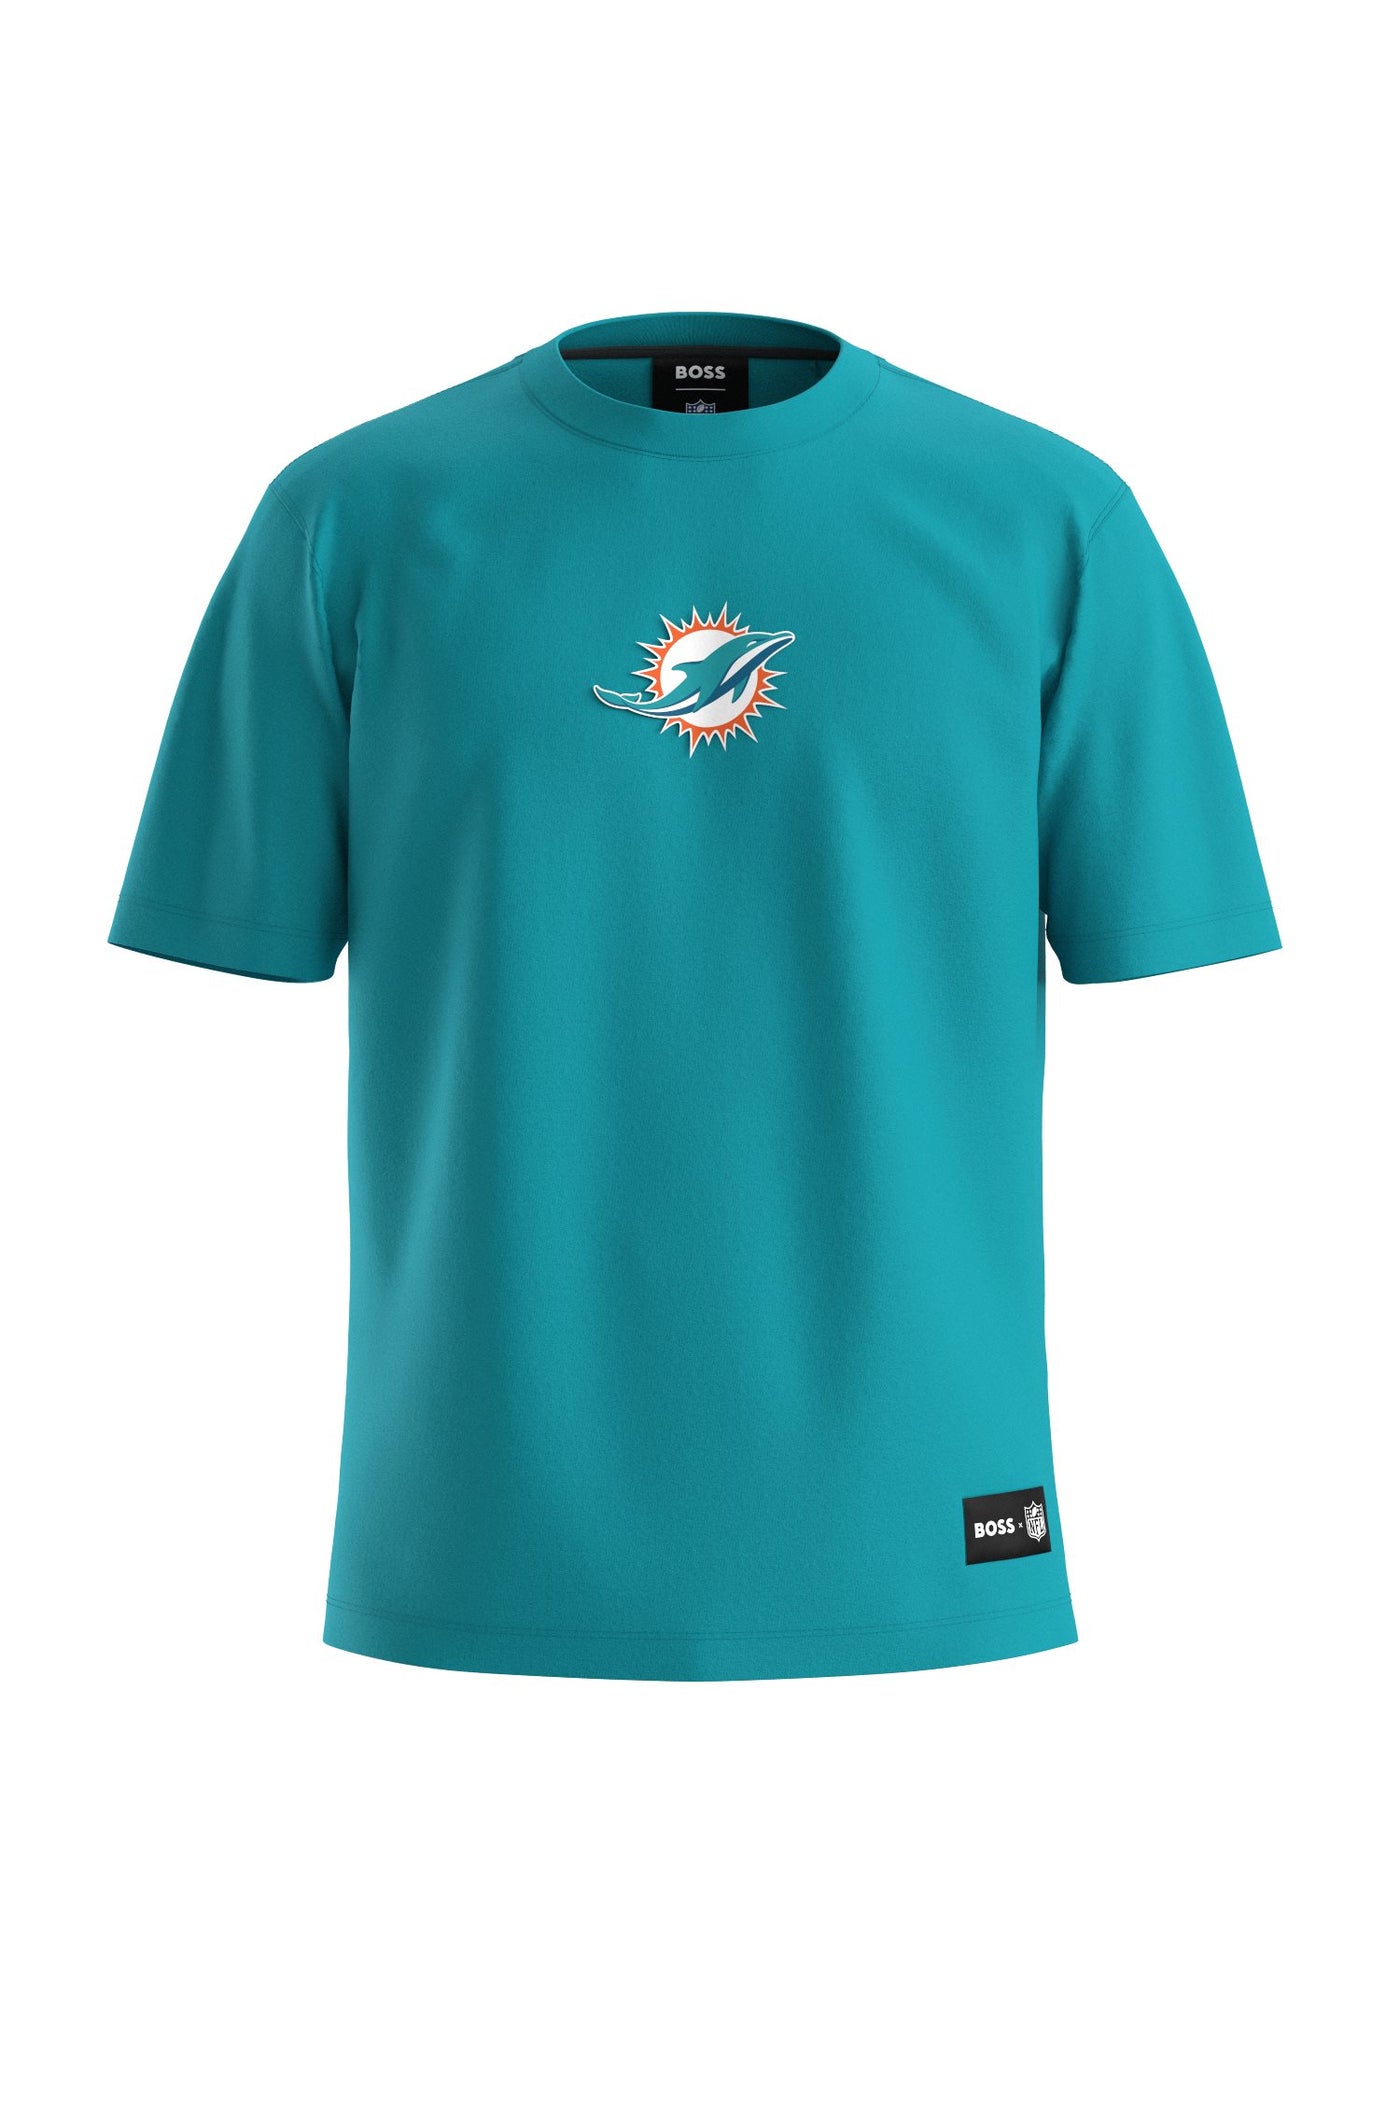 BOSS T Brady NFL T Shirt in Miami Dolphins